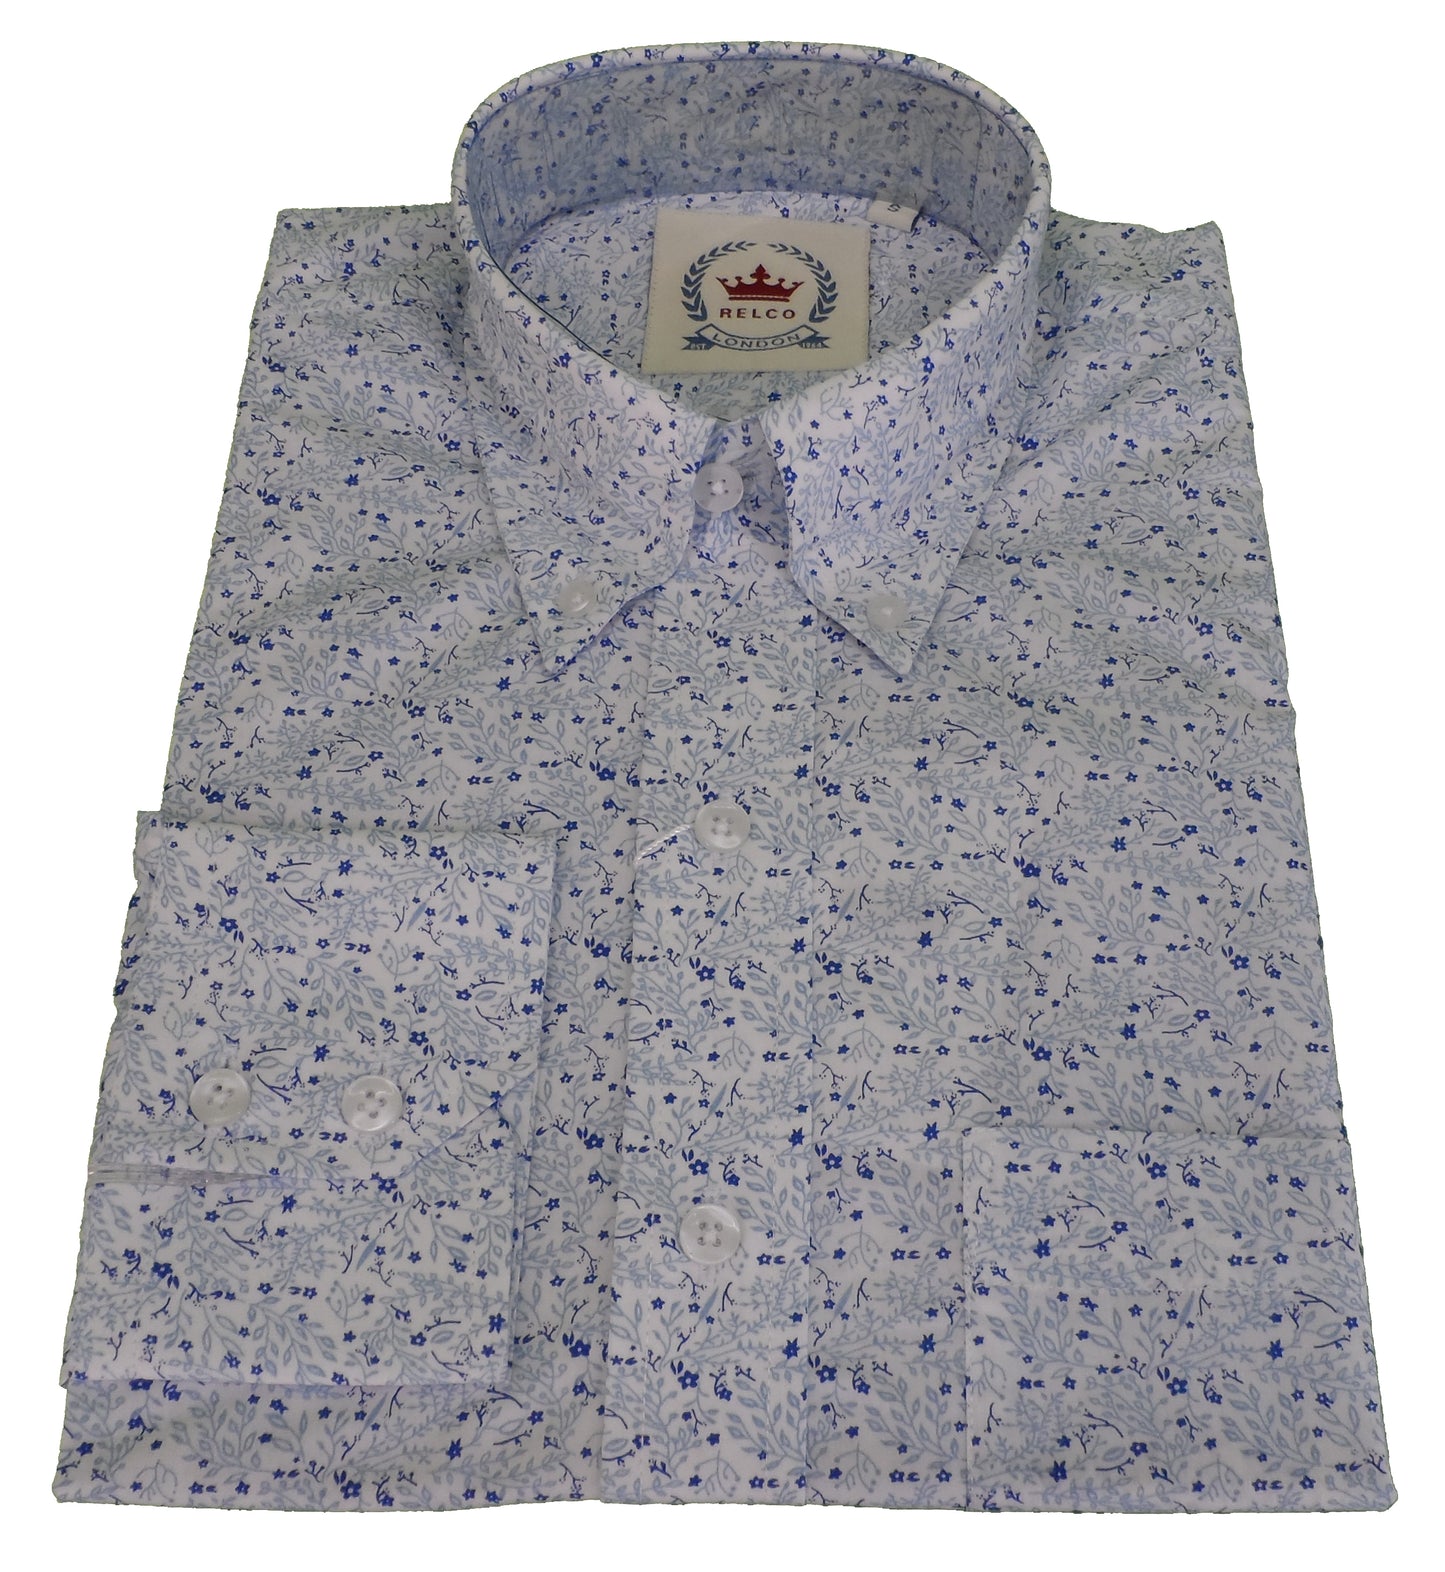 Camisas de manga larga con botones de algodón floral blanco Relco